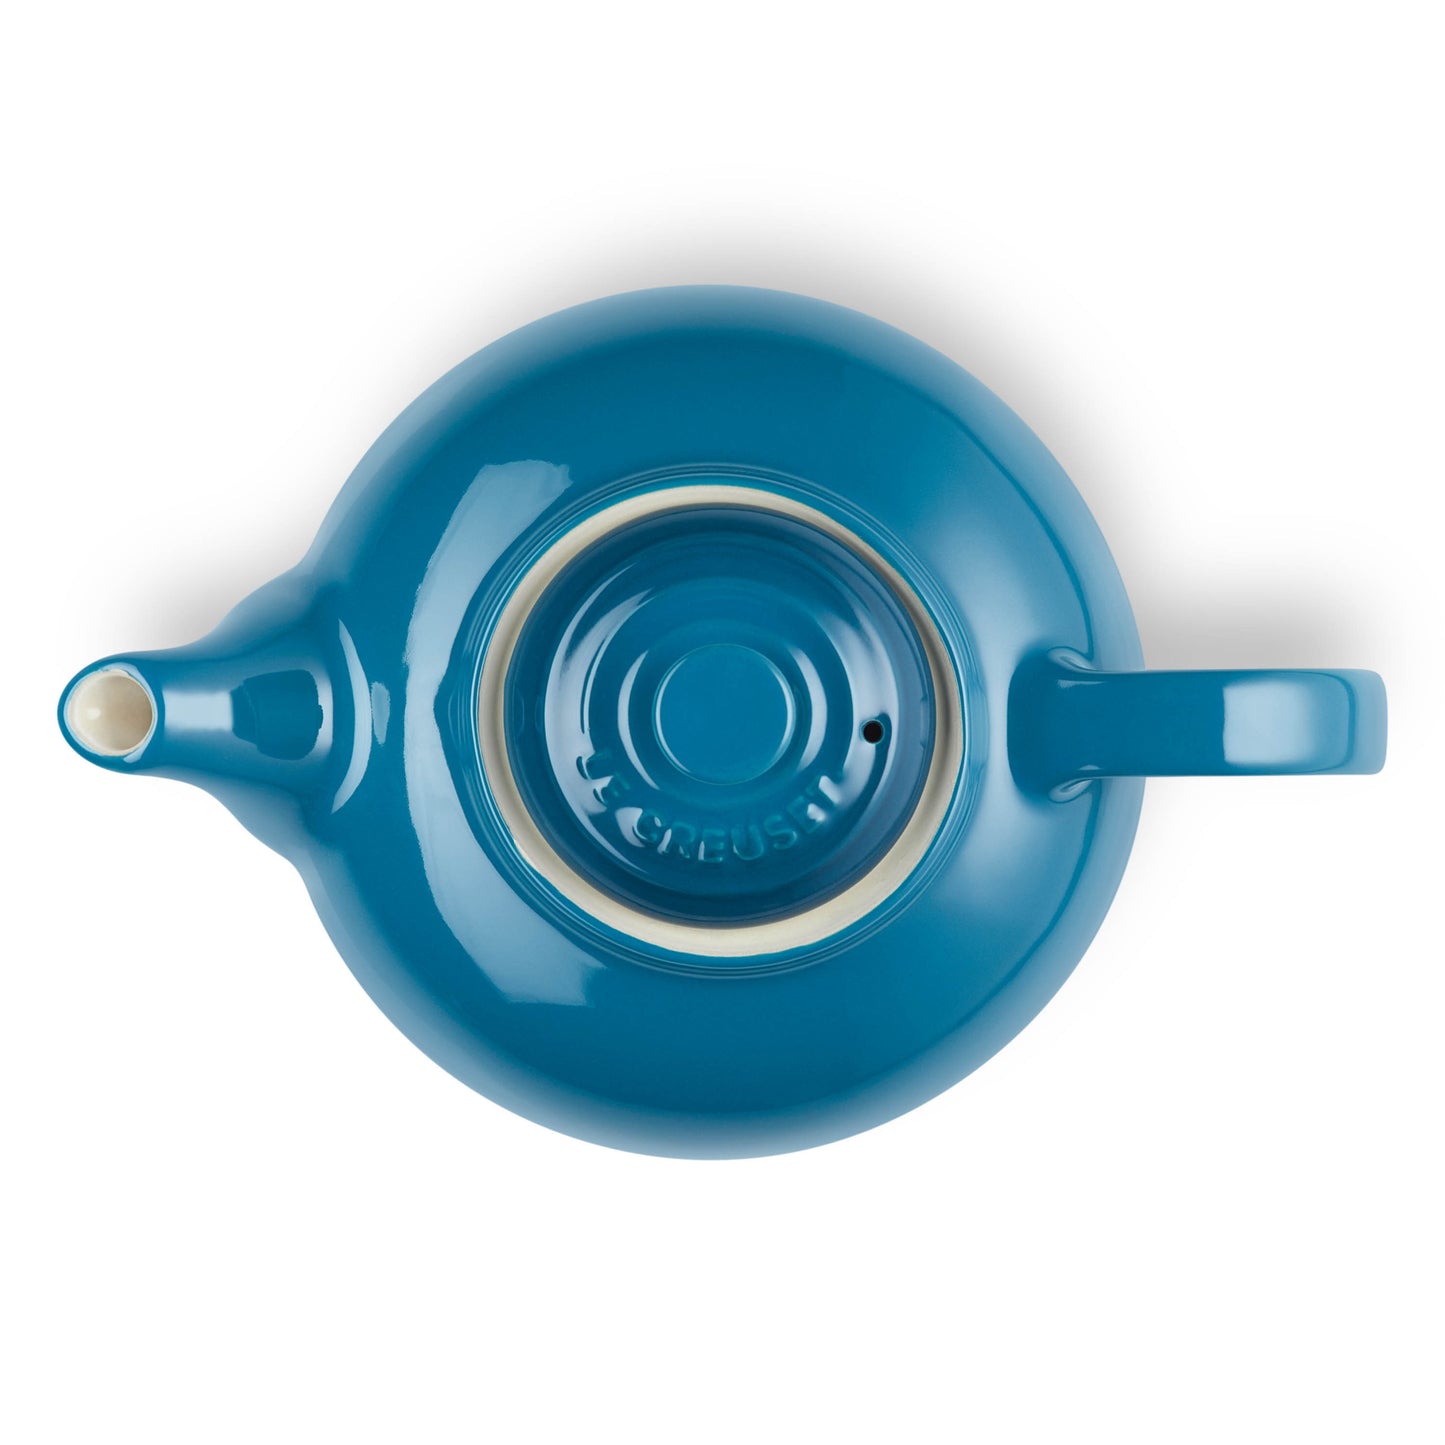 birds eye view of blue teapot 